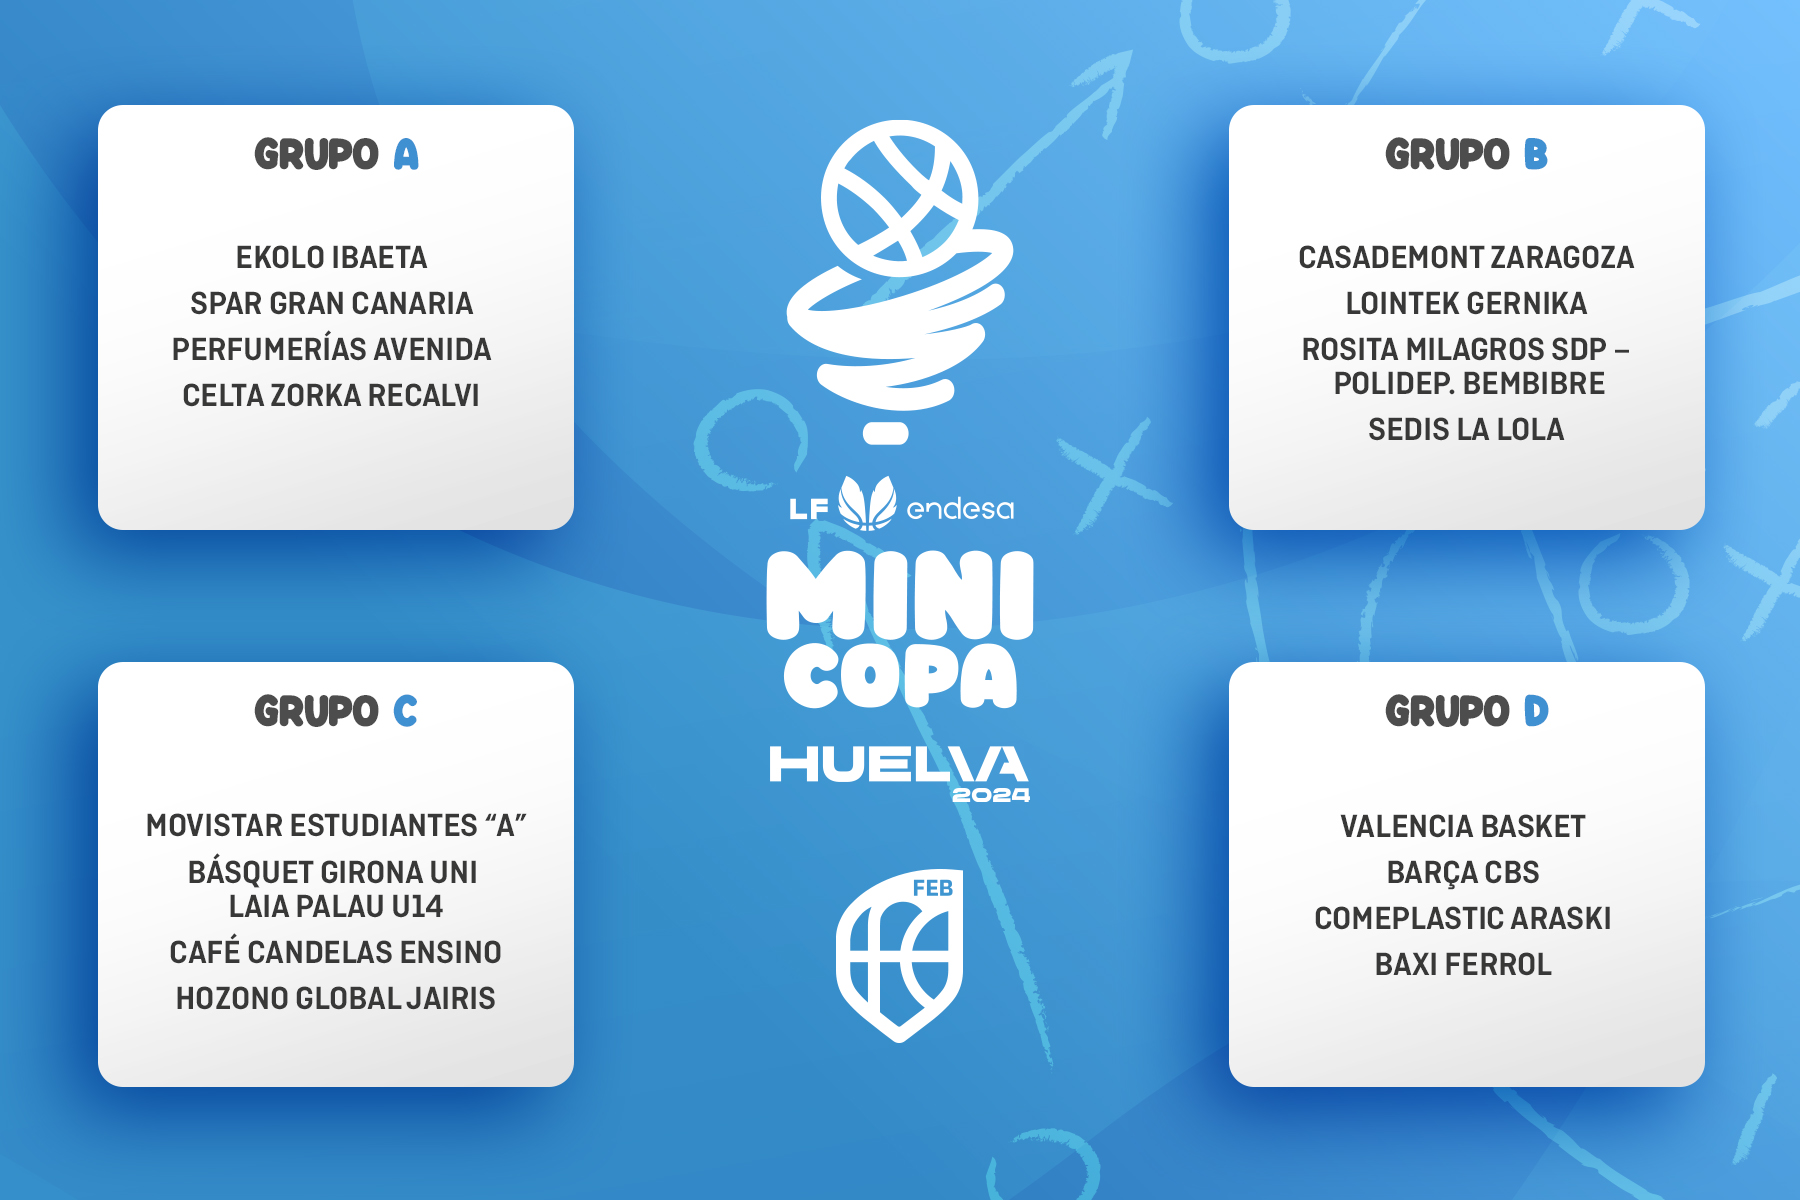 Minicopa LF Endesa: Movistar Estudiantes en el grupo C